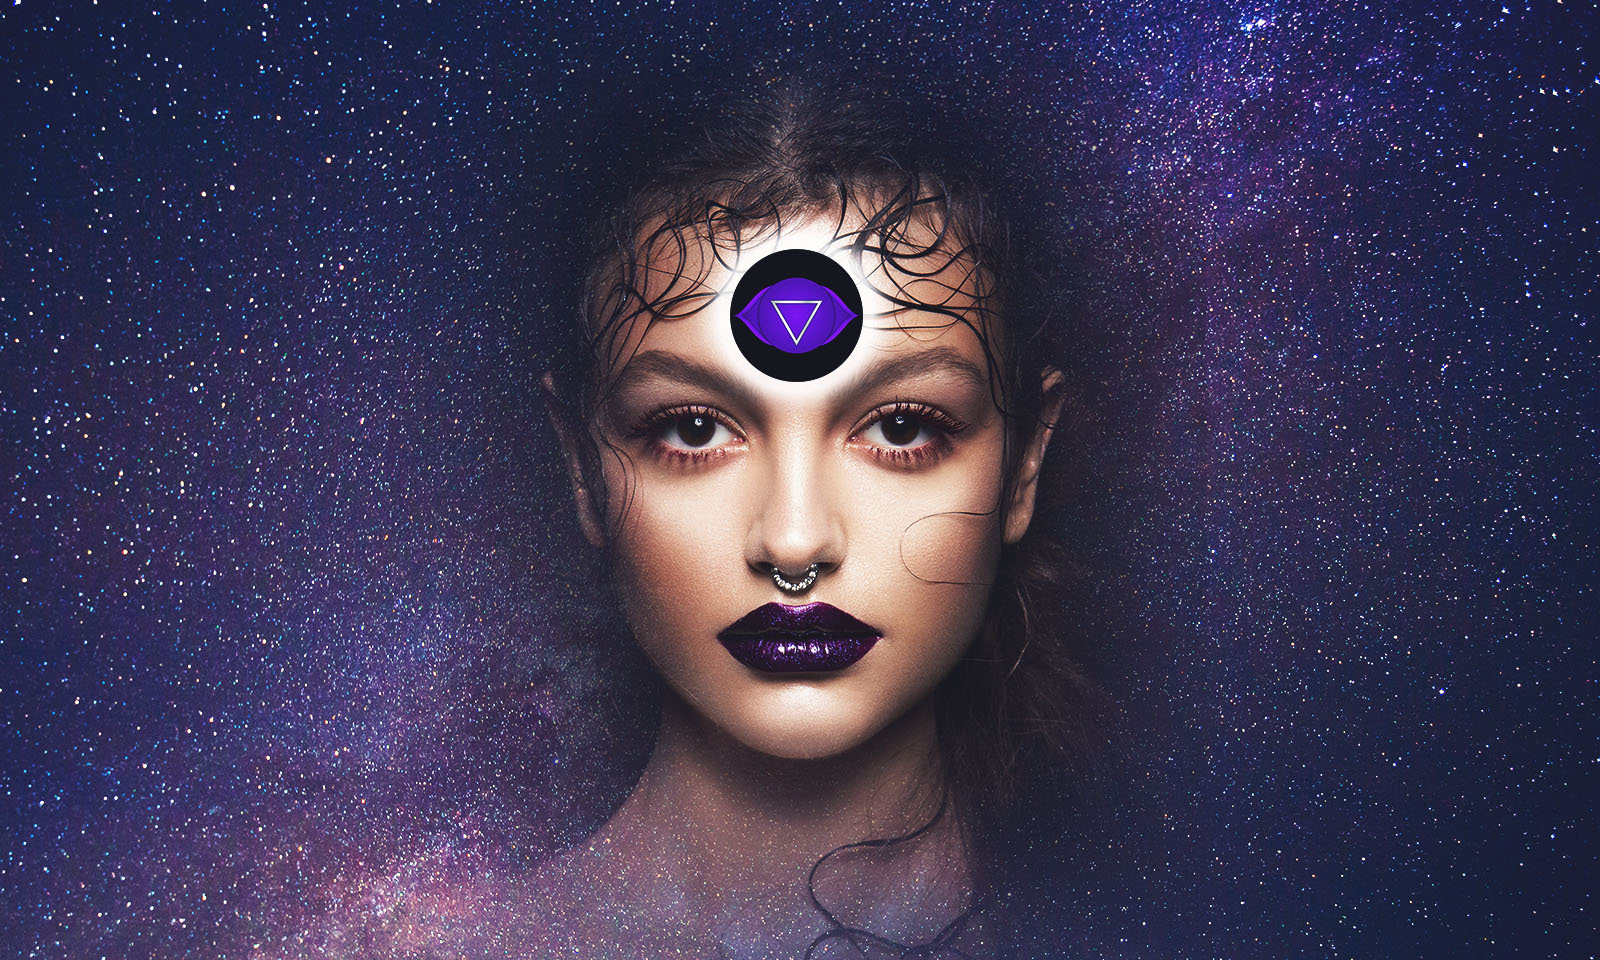 Third eye chakra activation image